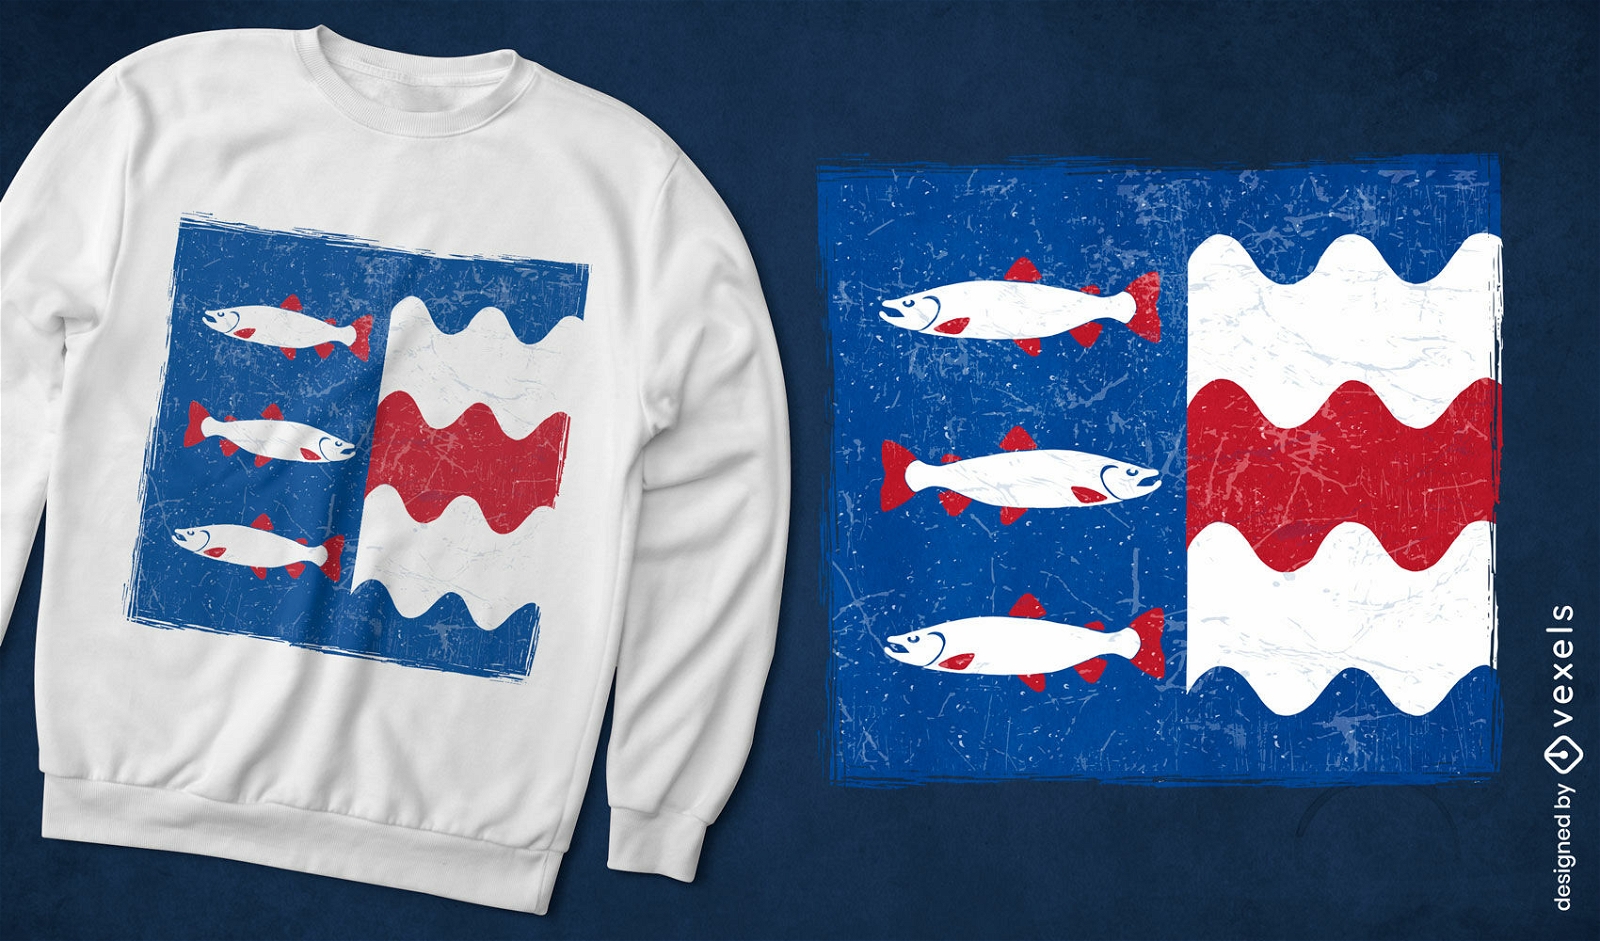 Dise?o de camiseta de formas de nataci?n de peces.